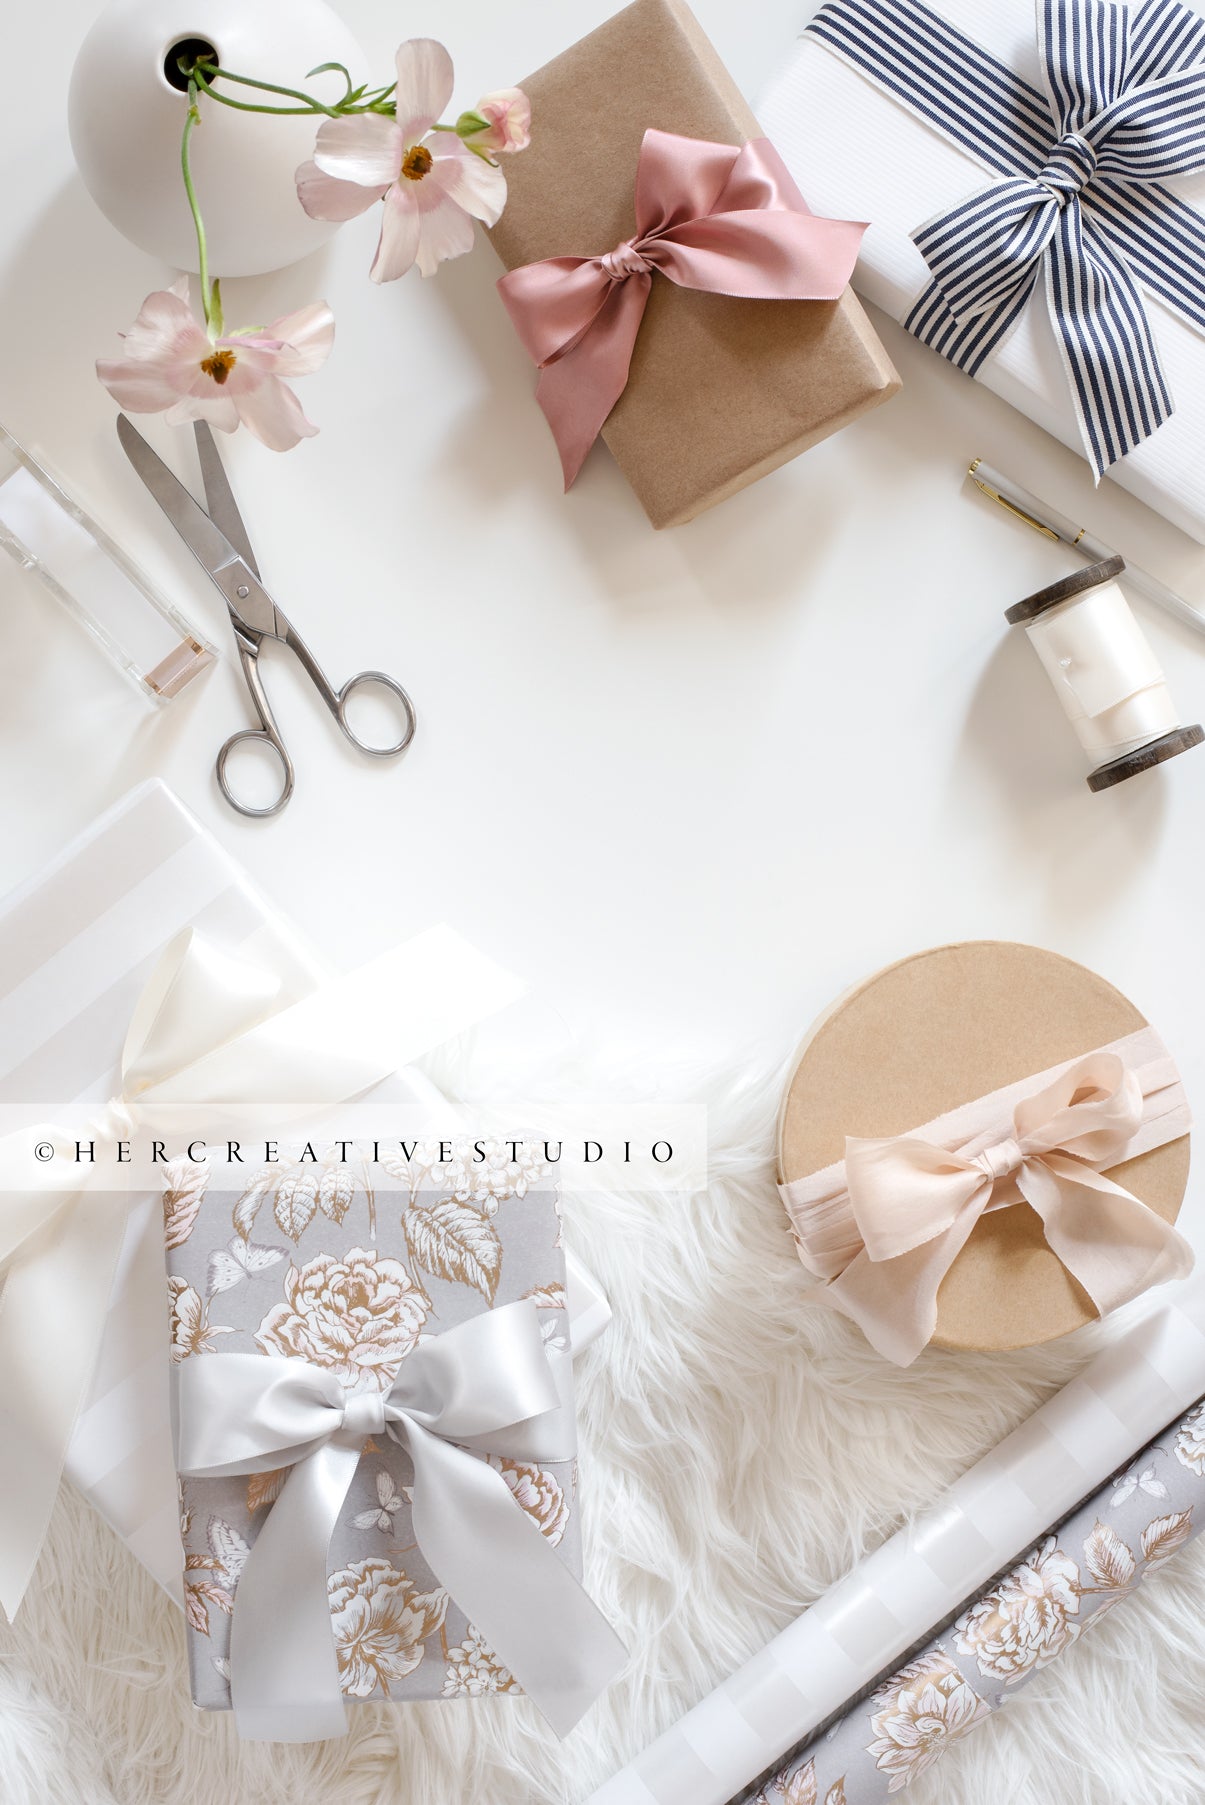 Gifts, Ribbon, Flowers & Scissors. Stock Image – Her Creative Studio